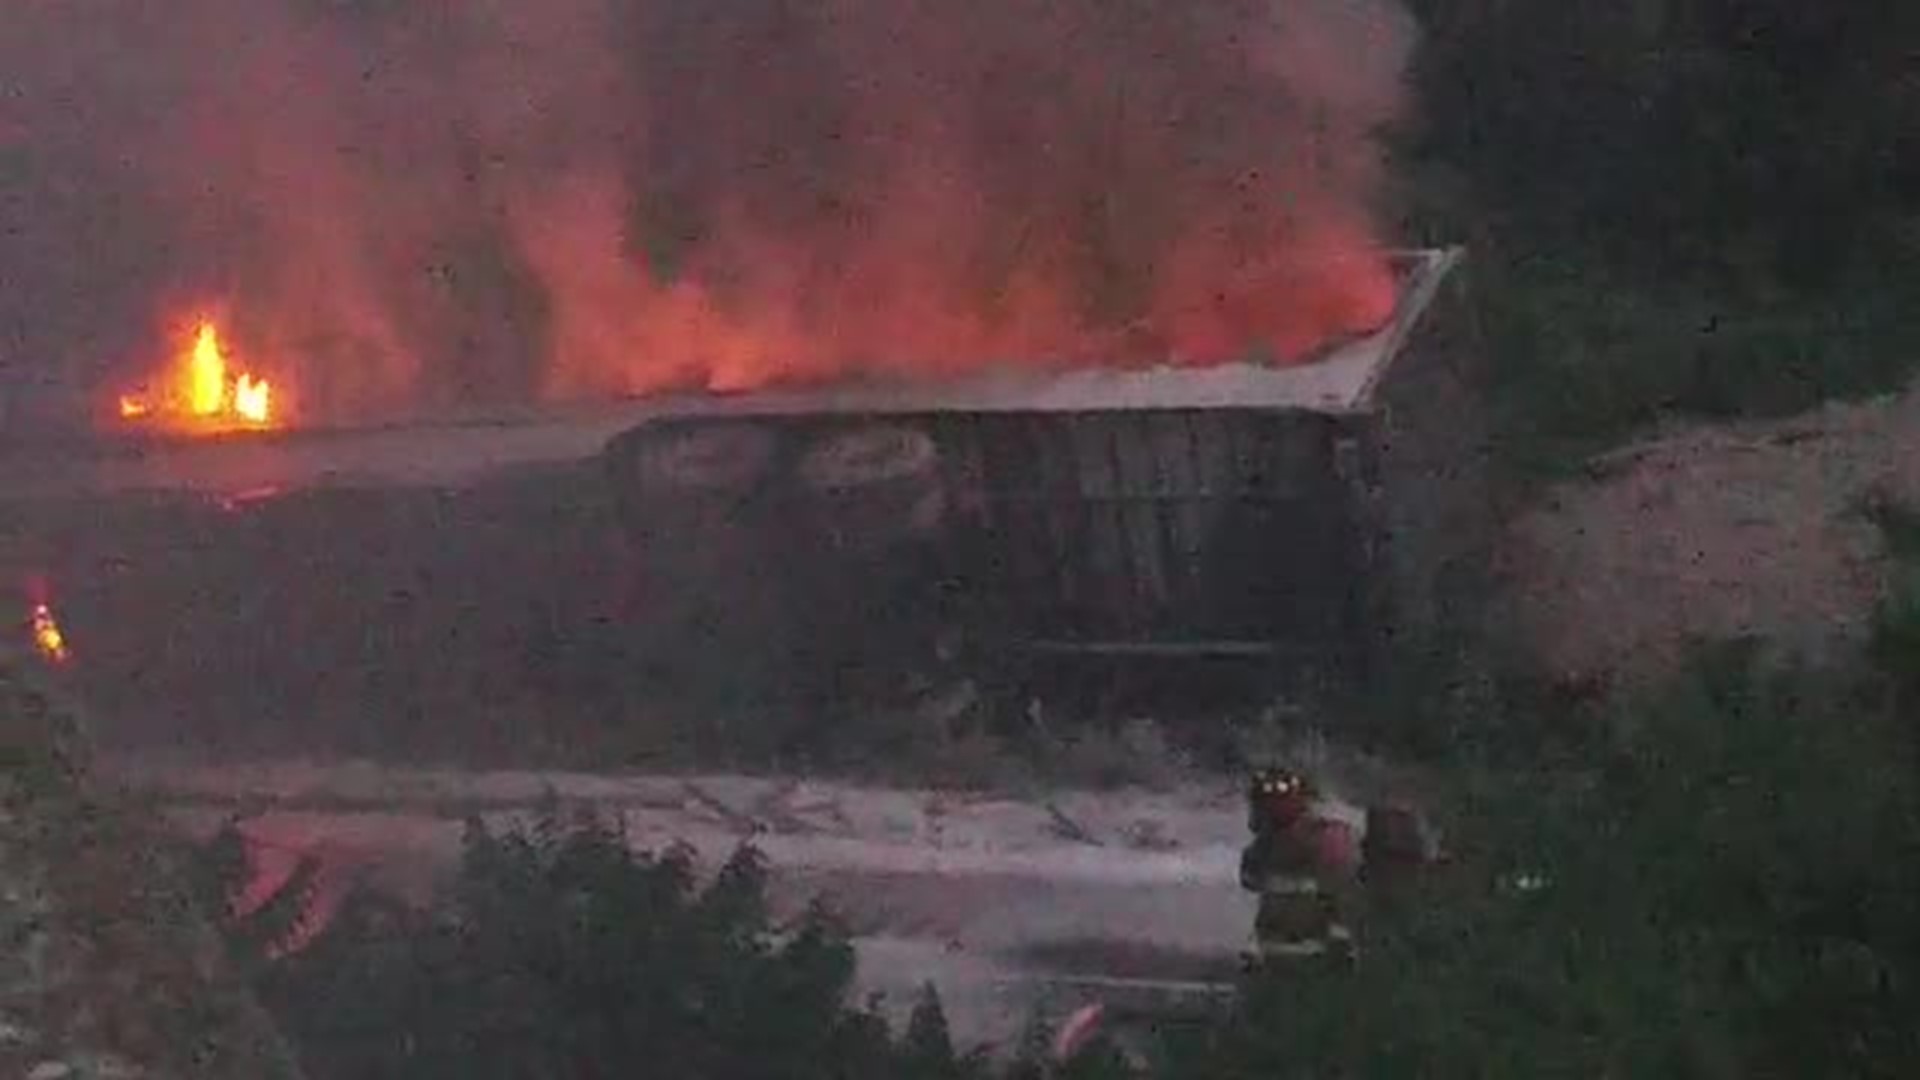 Stonington tractor trailer crash and fire